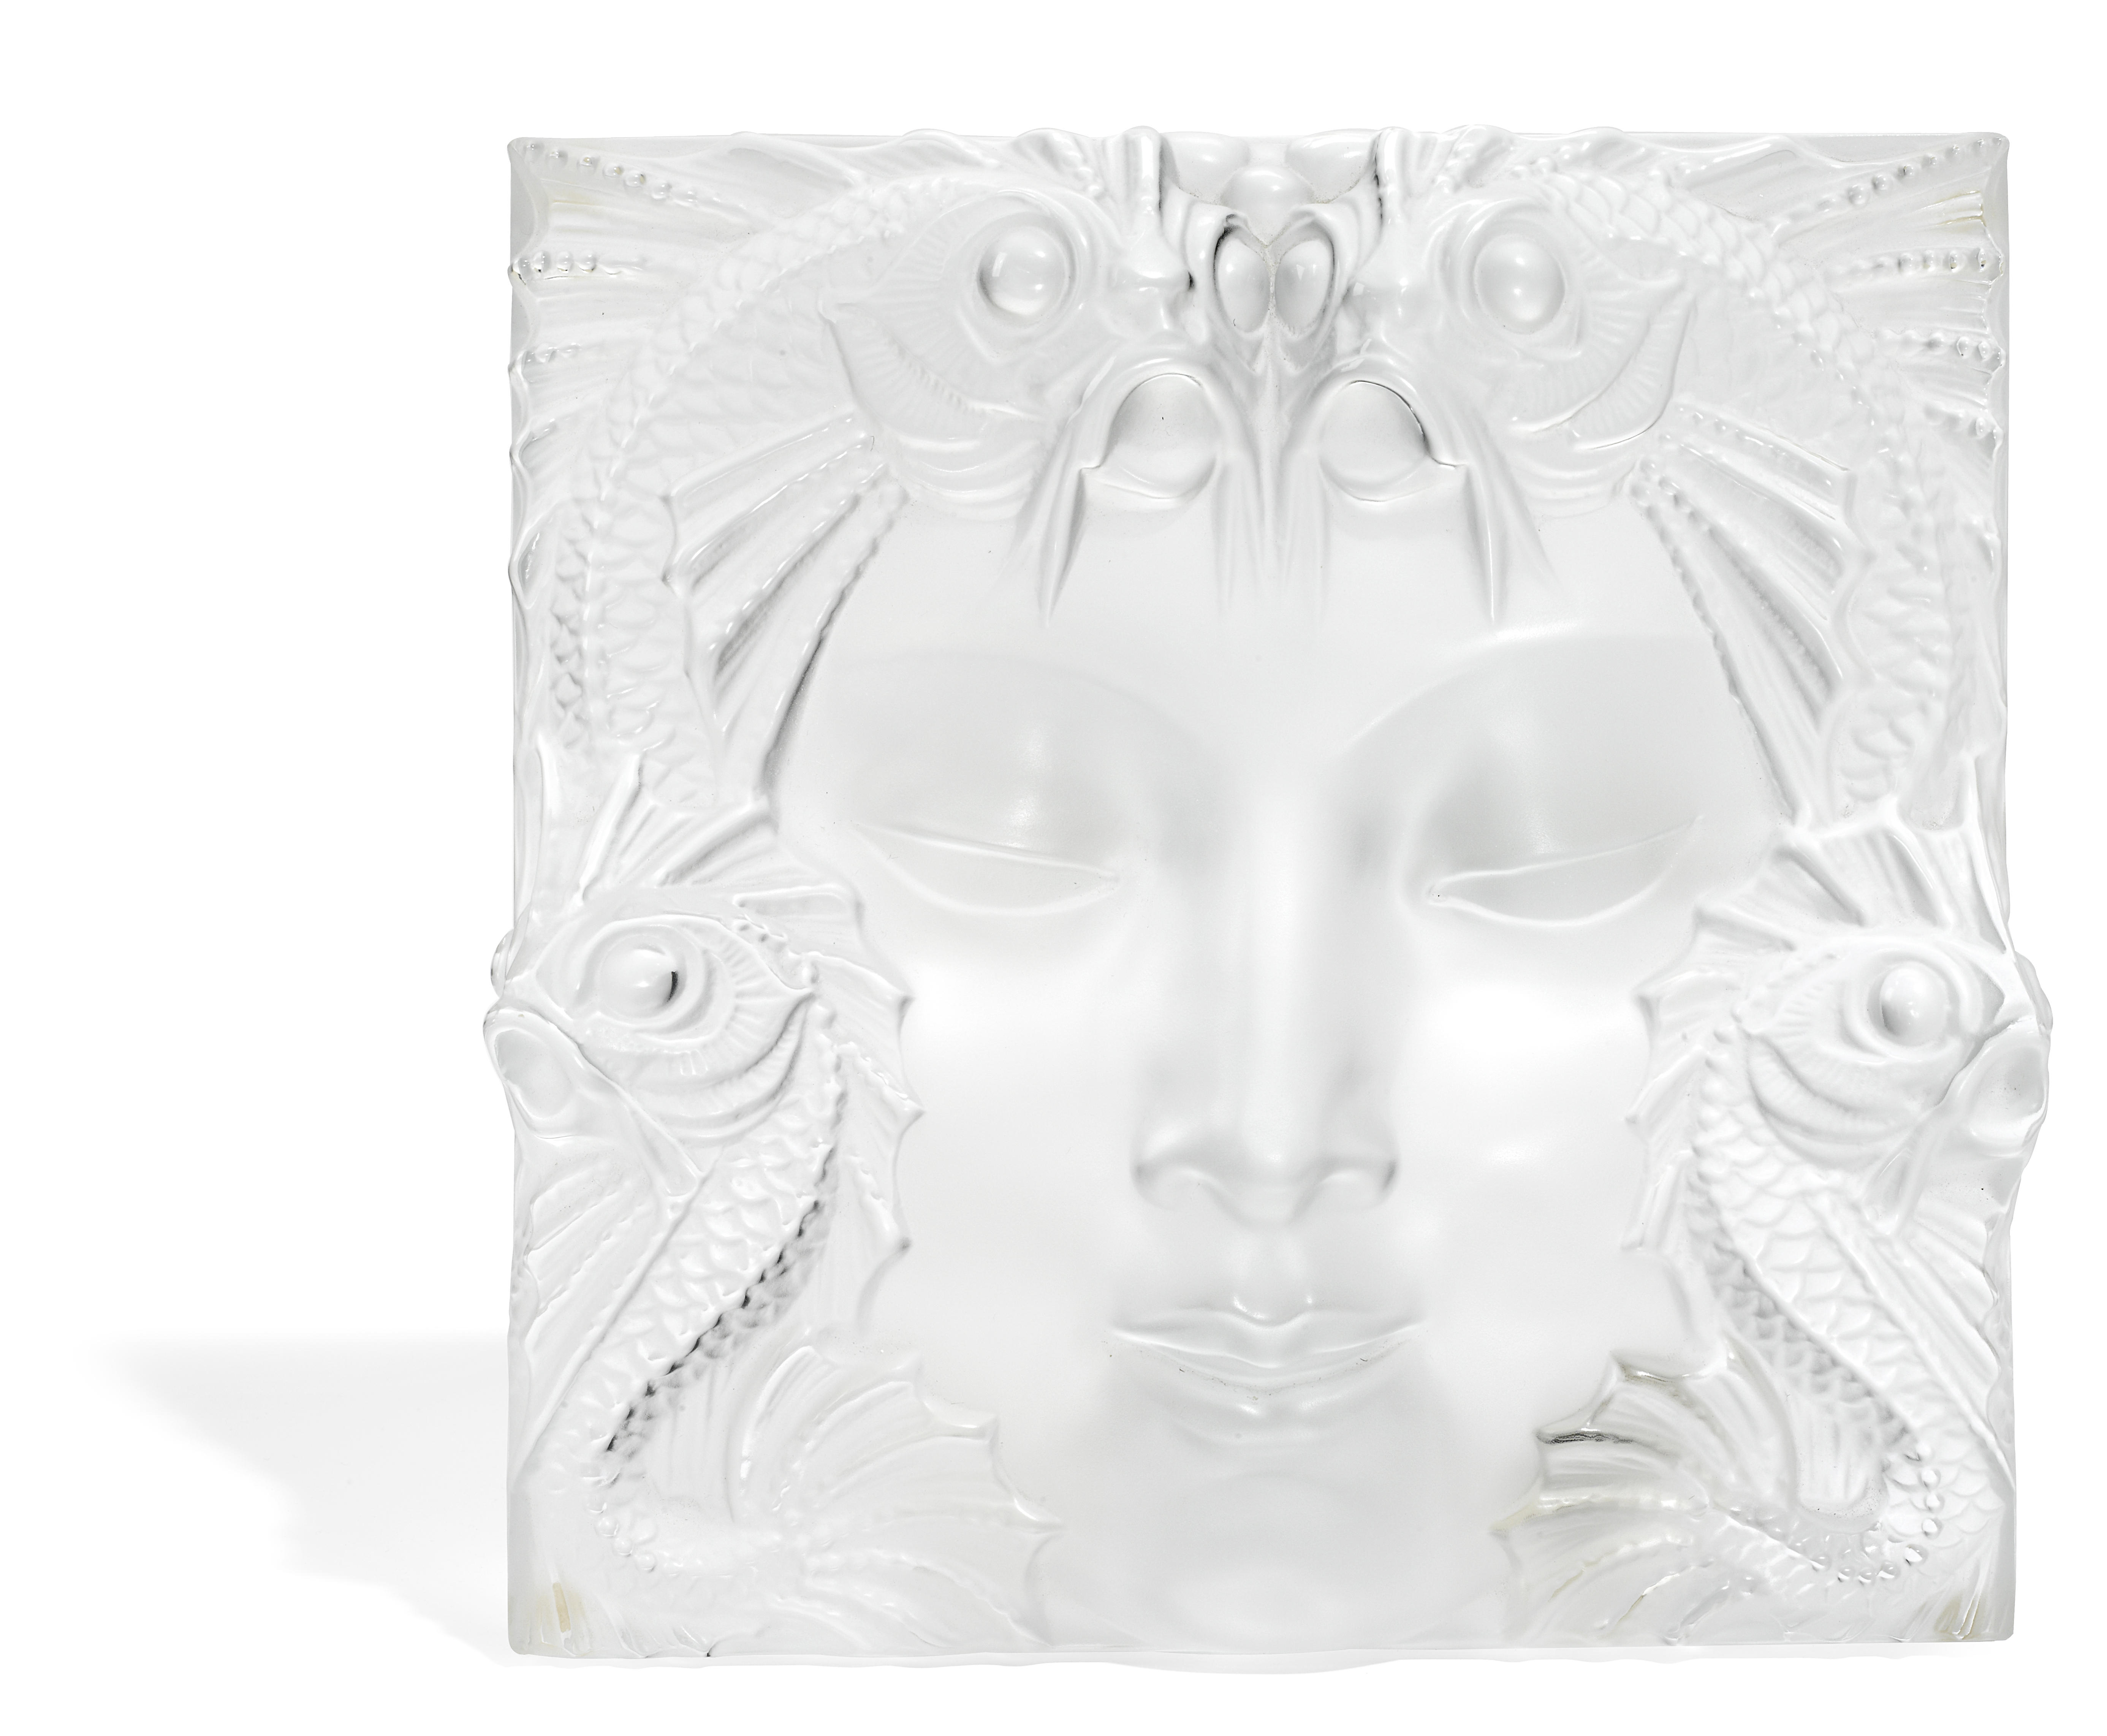 A Cristal Lalique molded glass 12b951